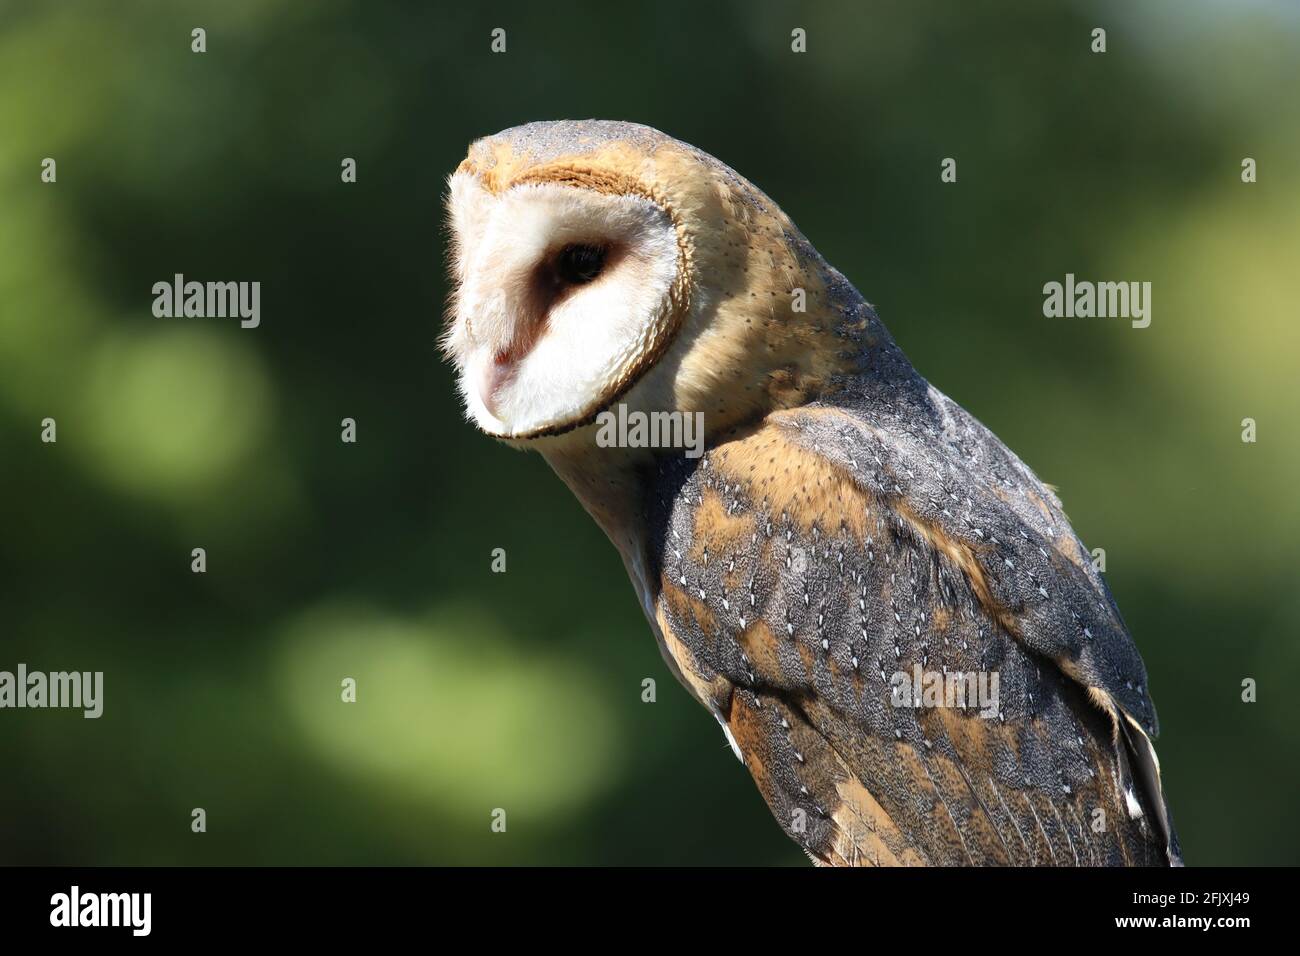 Barn owl portrait Stock Photo